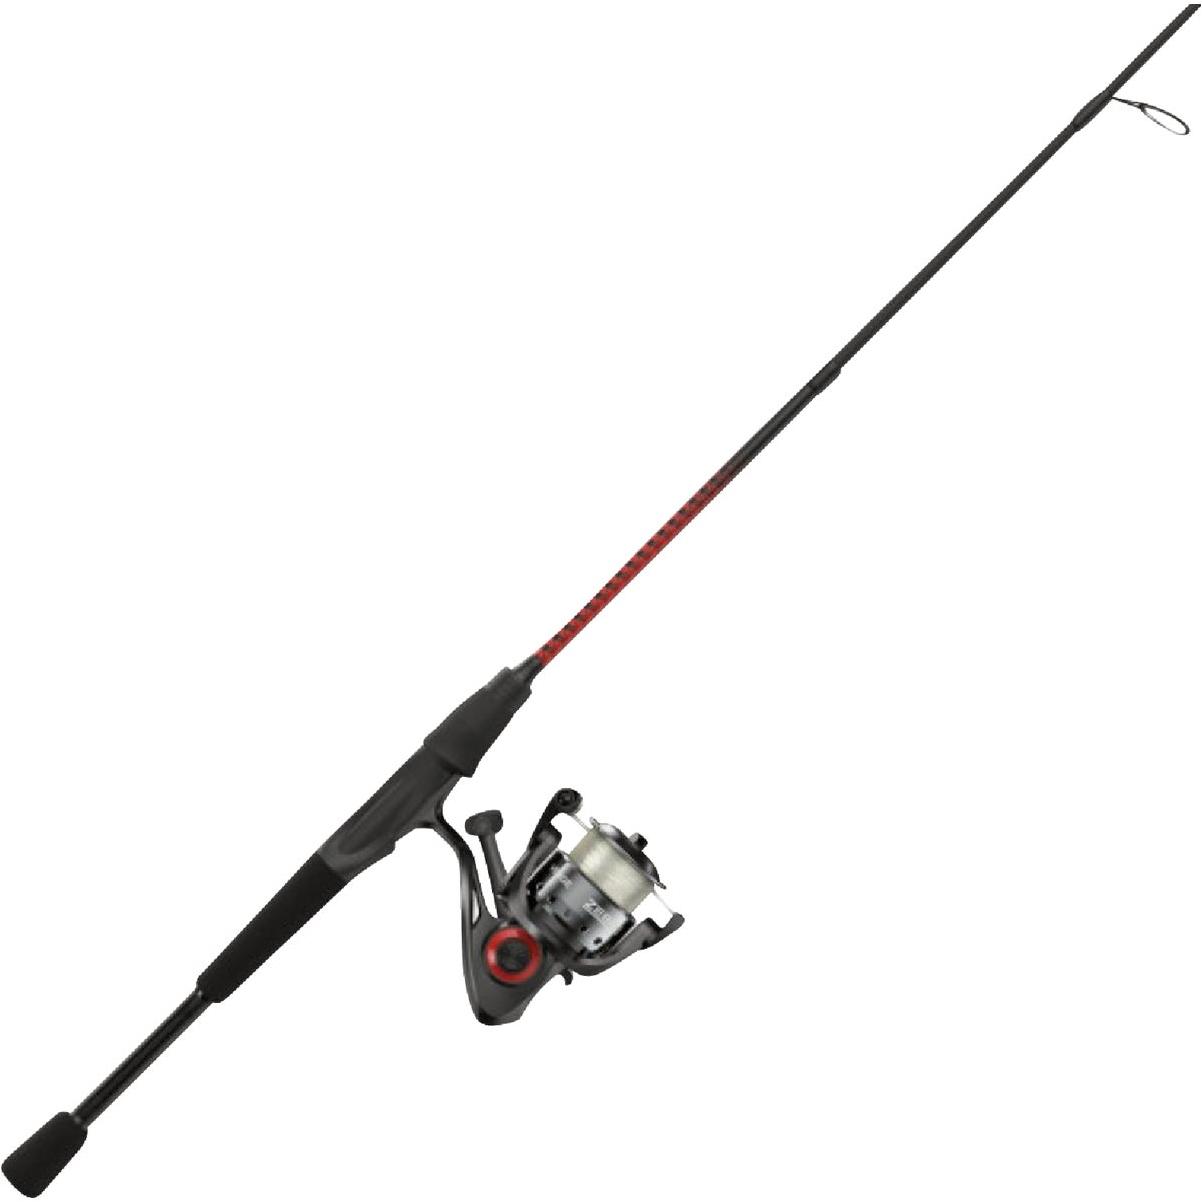 Zebco Verge 8 Ft. Graphite Fishing Rod & Spining Reel